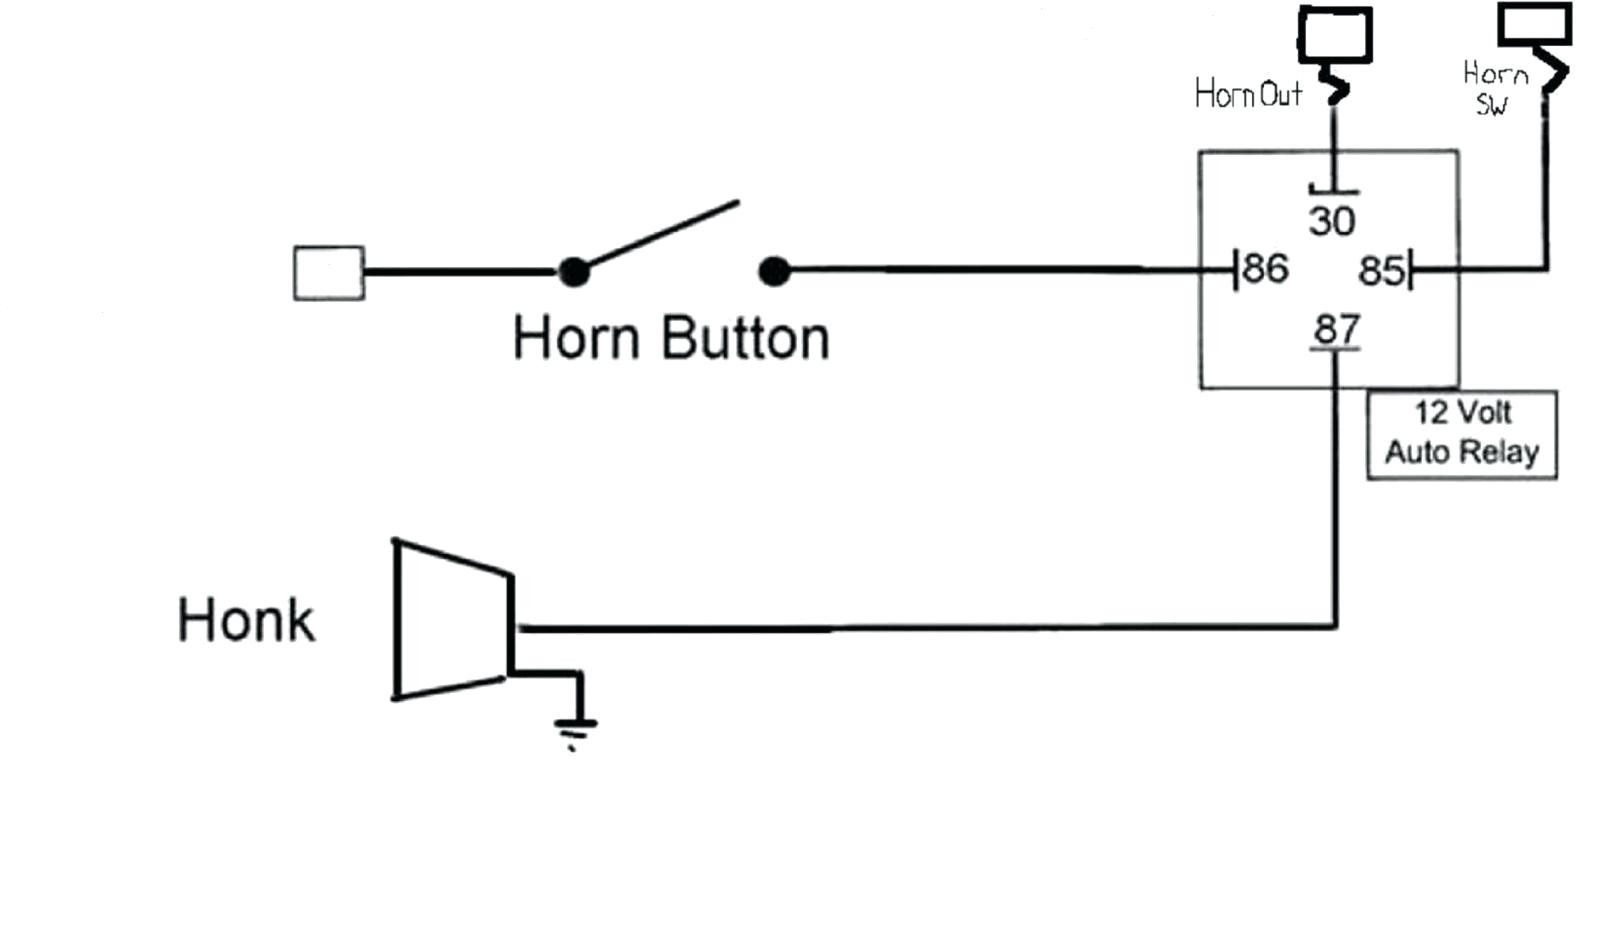 Wiring Car Horn Diagram - Wiring Diagram Data - Horn Relay Wiring Diagram